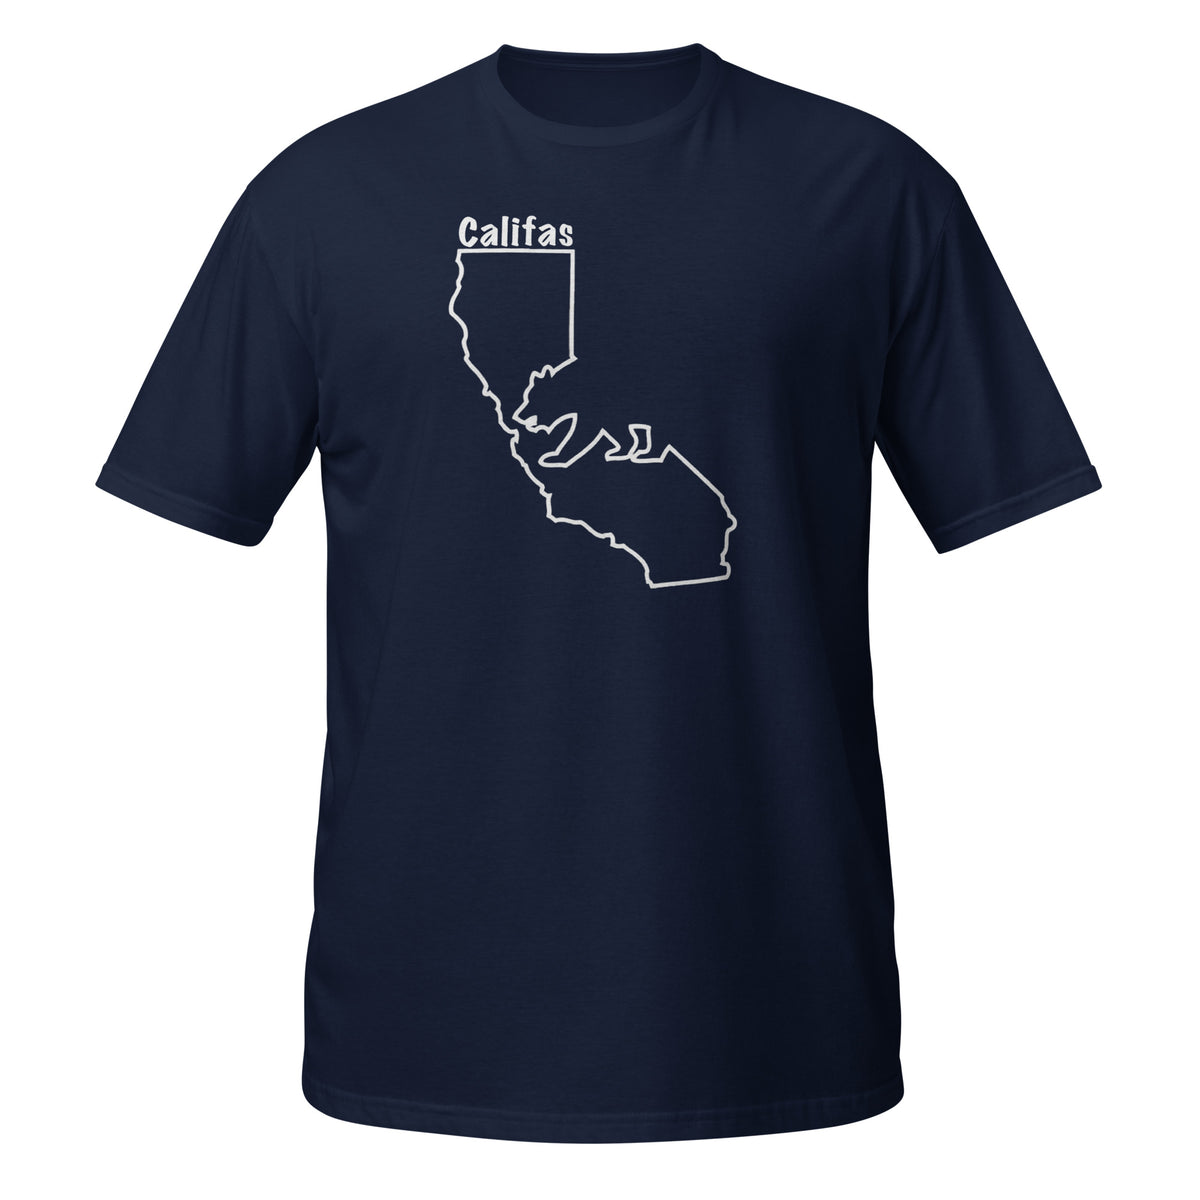 Califas (California) T-Shirt